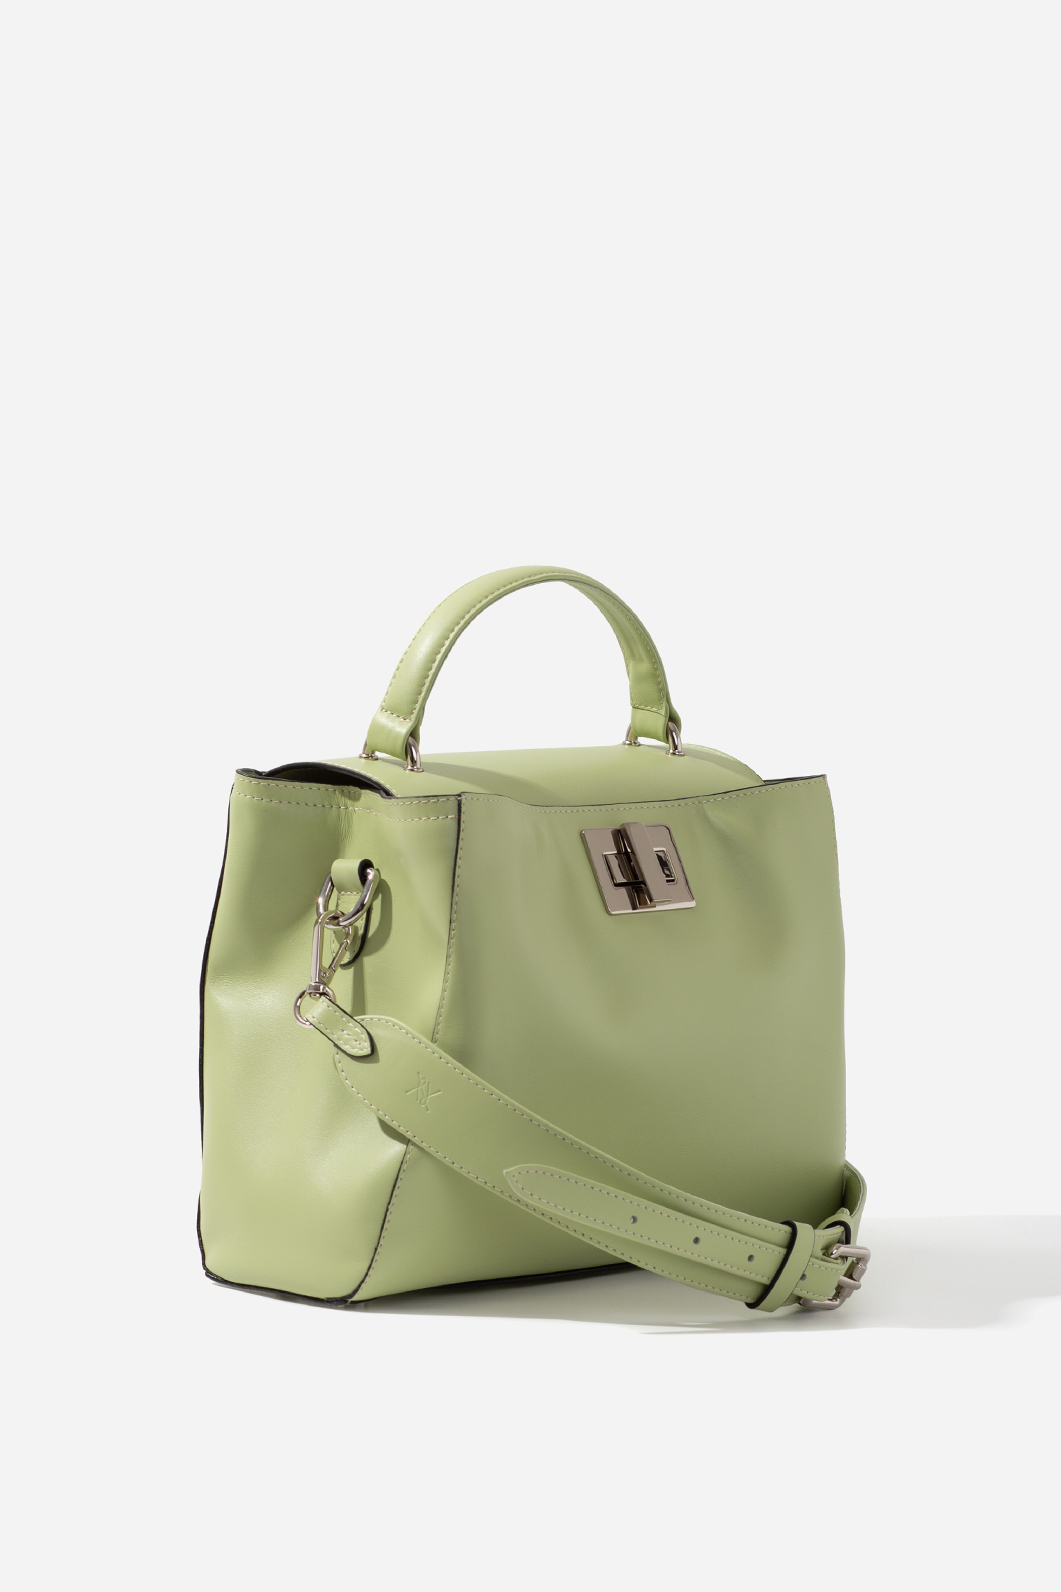 ERNA SOFT light green bag /silver/